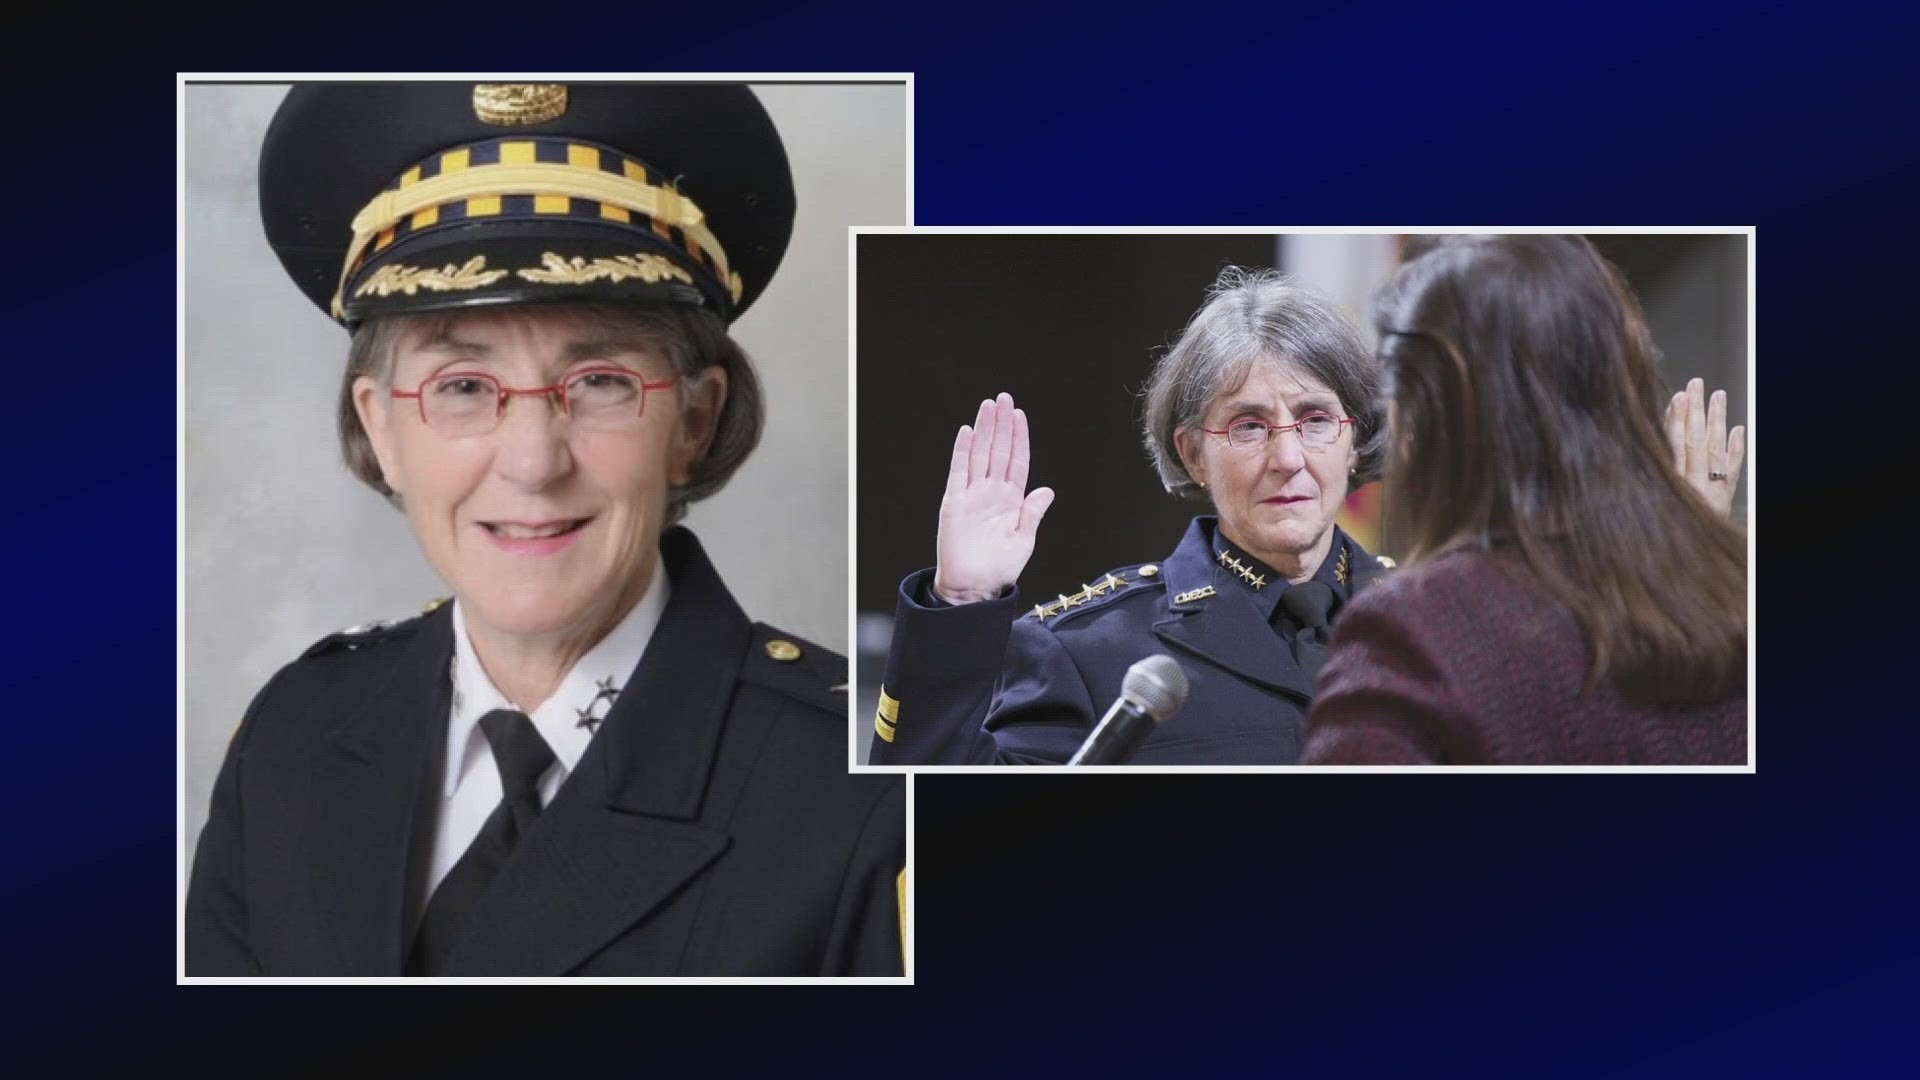 Veteran police leader Anne Kirkpatrick has one final hurdle: city council confirmation.